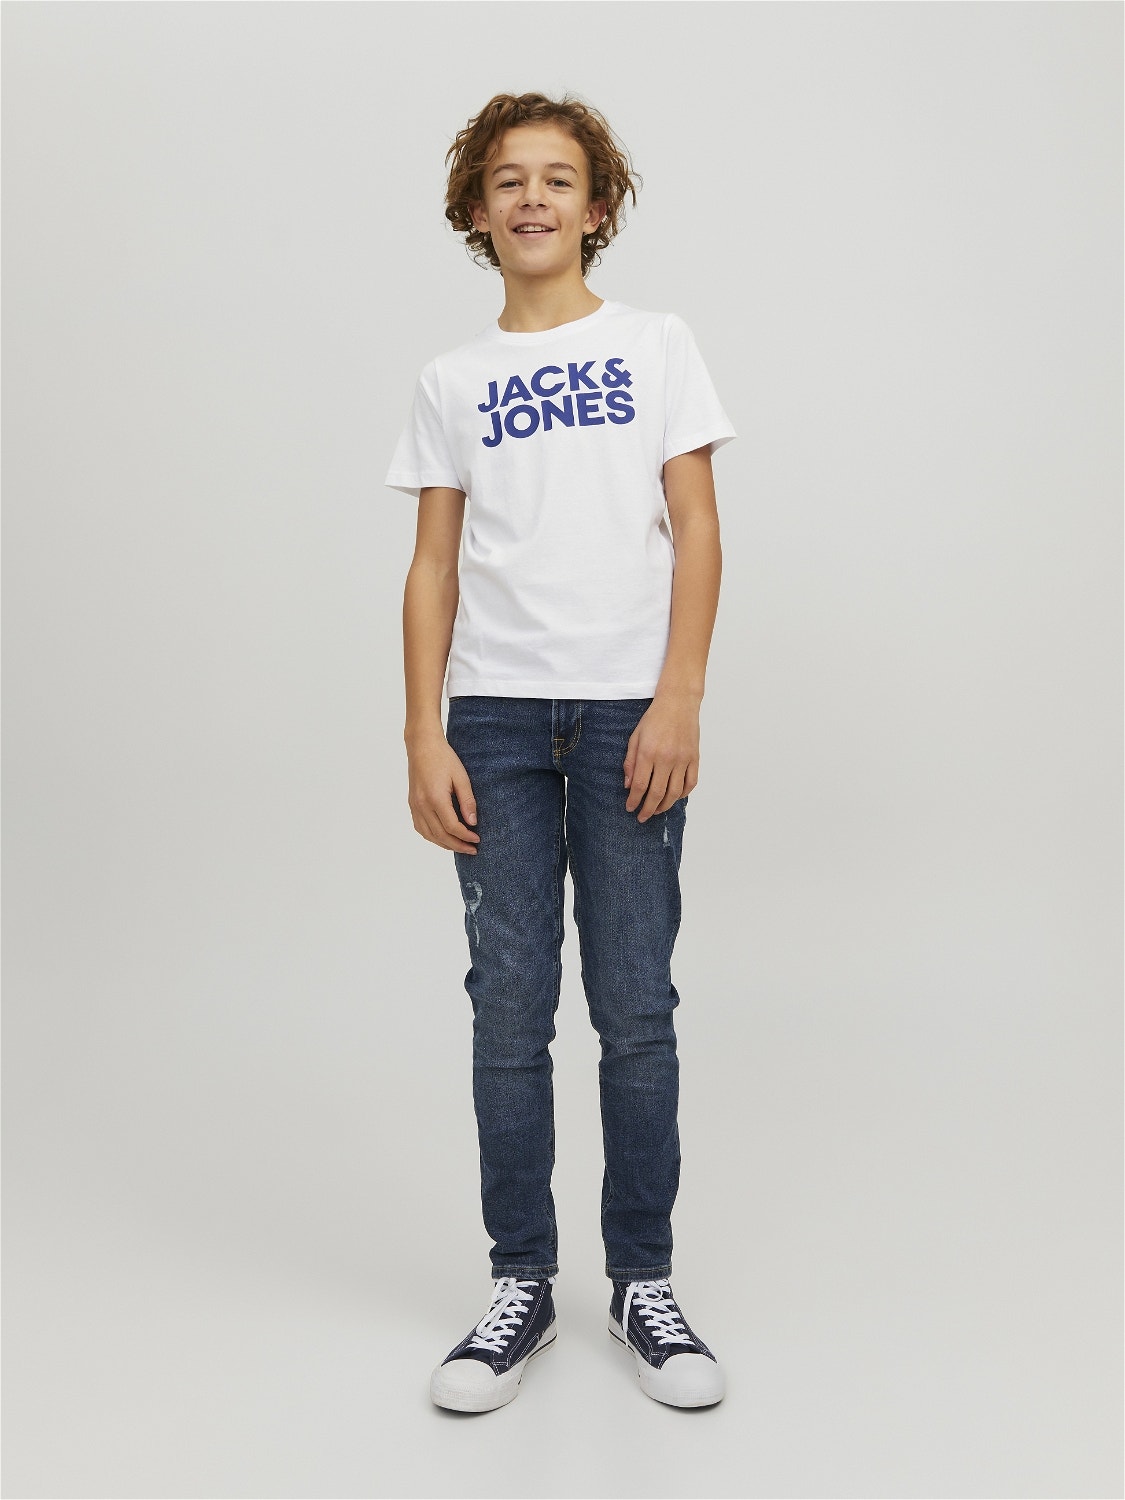 Jack & Jones 2 Logo T-shirt Junior -Navy Blazer - 12199947